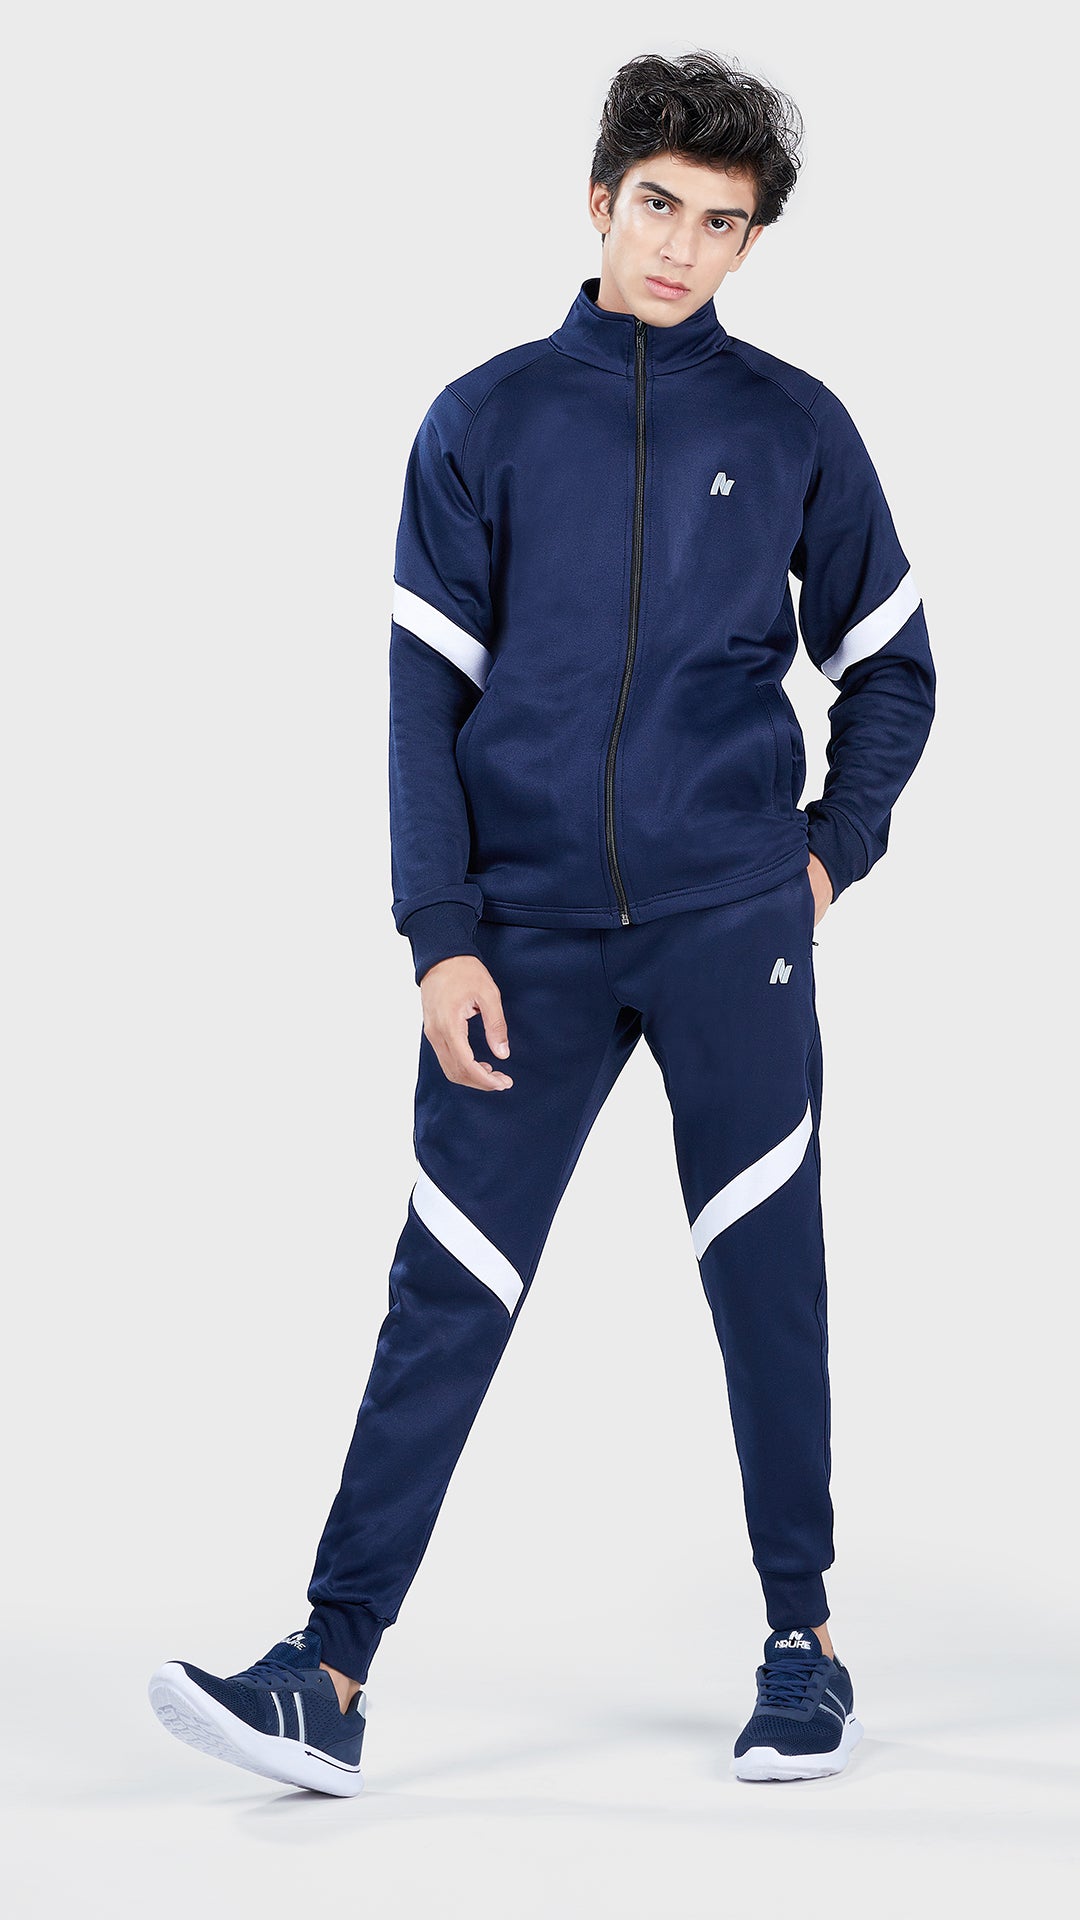 Men's Winter Dri-Fit Track Suit